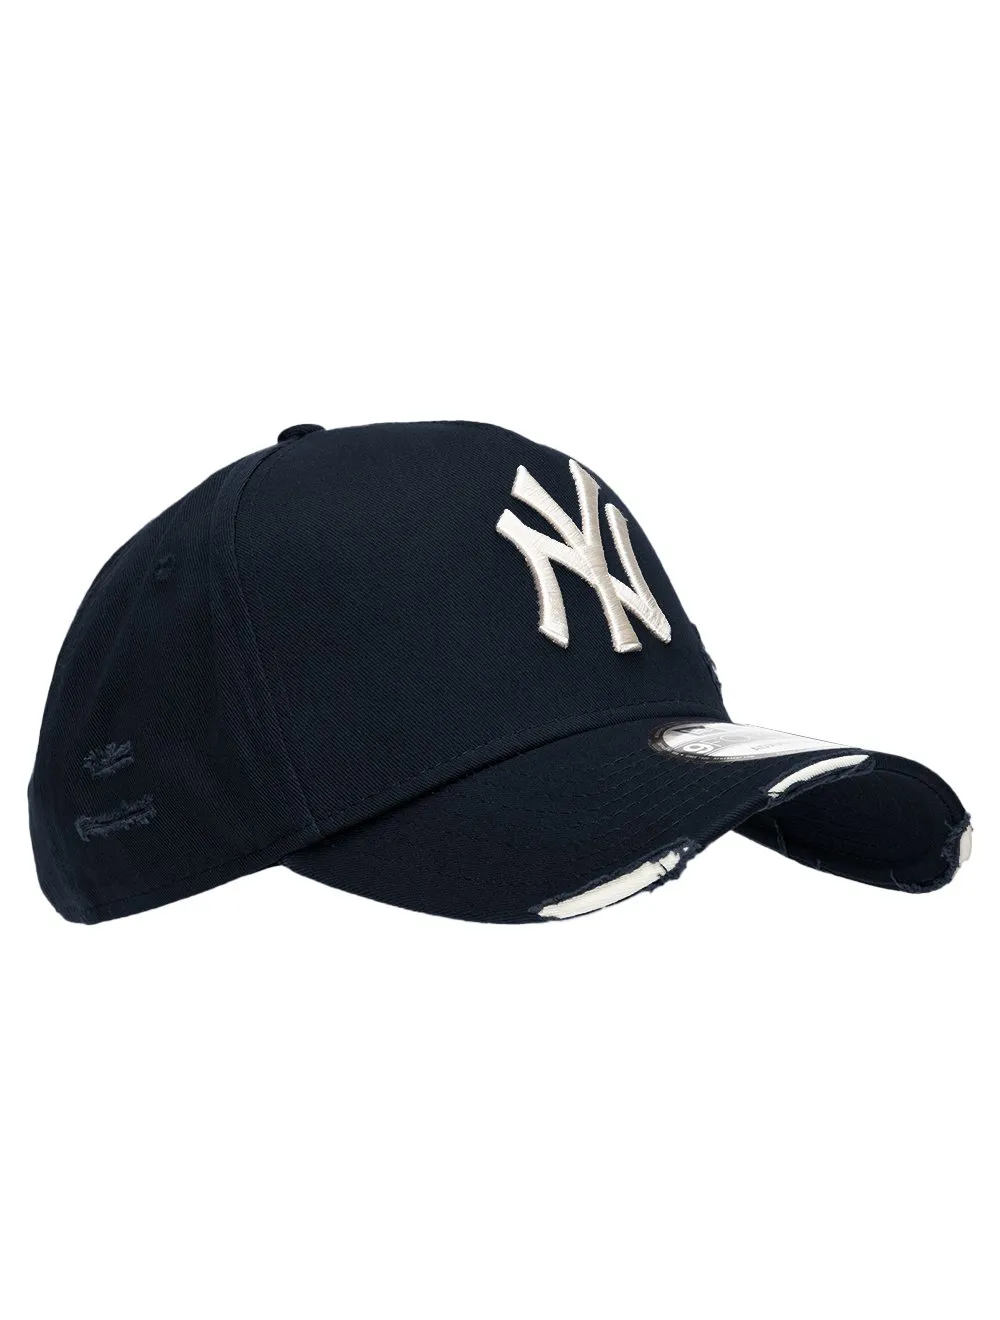 Boné New Era 9Twenty MLB New York Yankees Destroyed Grey Marinho